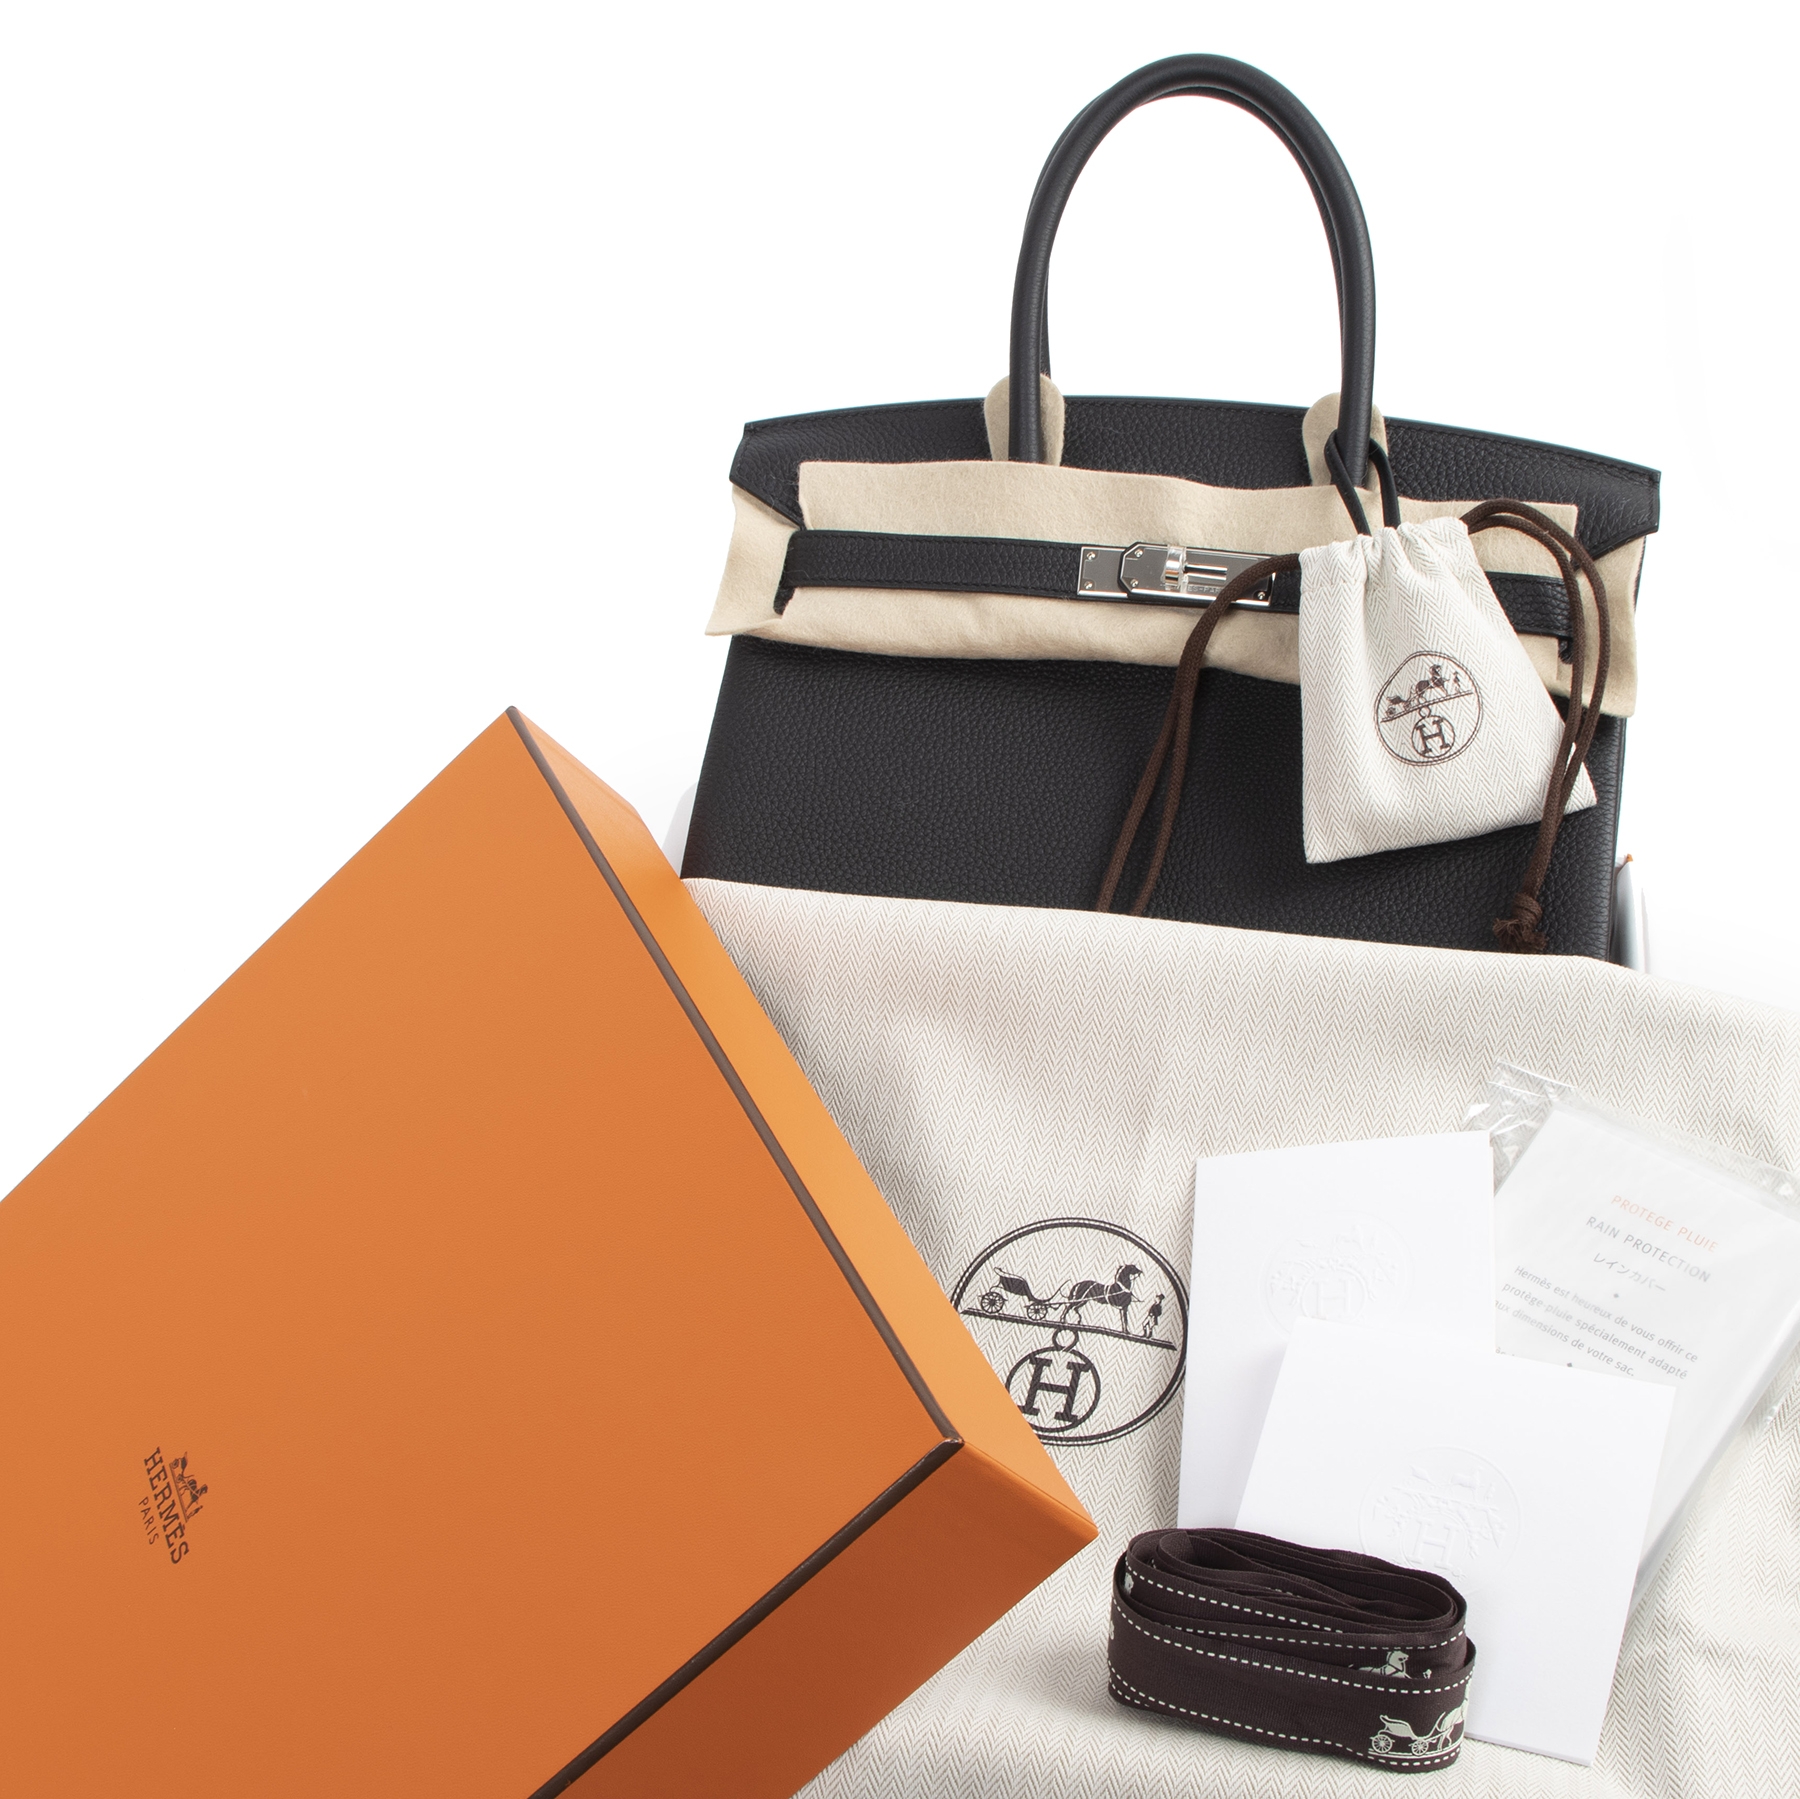 Louis Vuitton's $4,000 Plastic Freezer Bag Mimics Real Bags